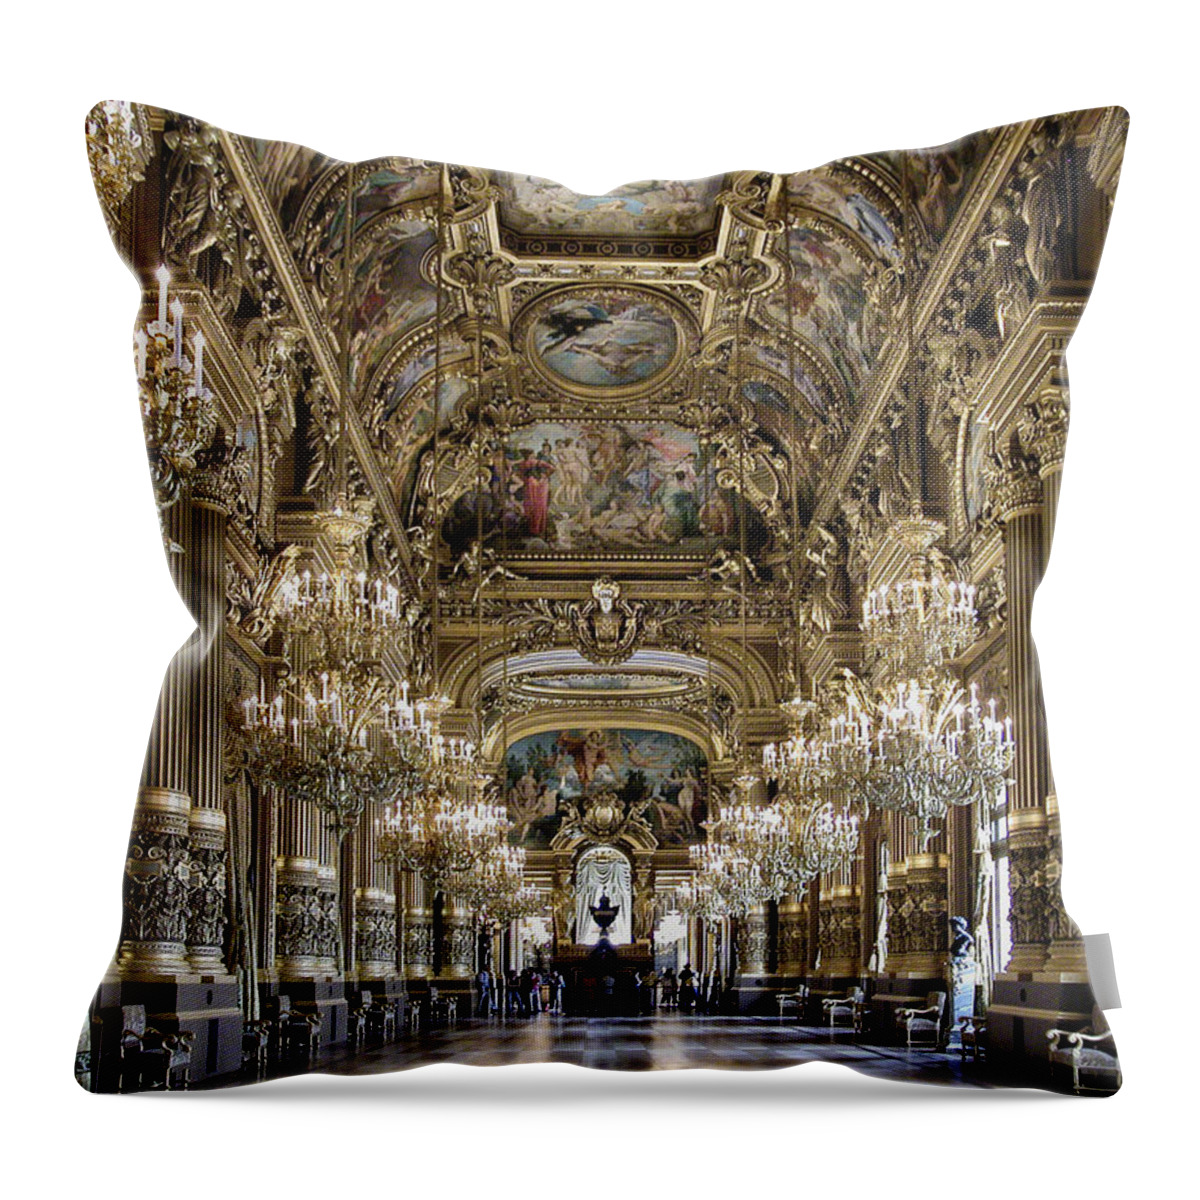 France Throw Pillow featuring the photograph Palais Garnier Grand Foyer by Alan Toepfer